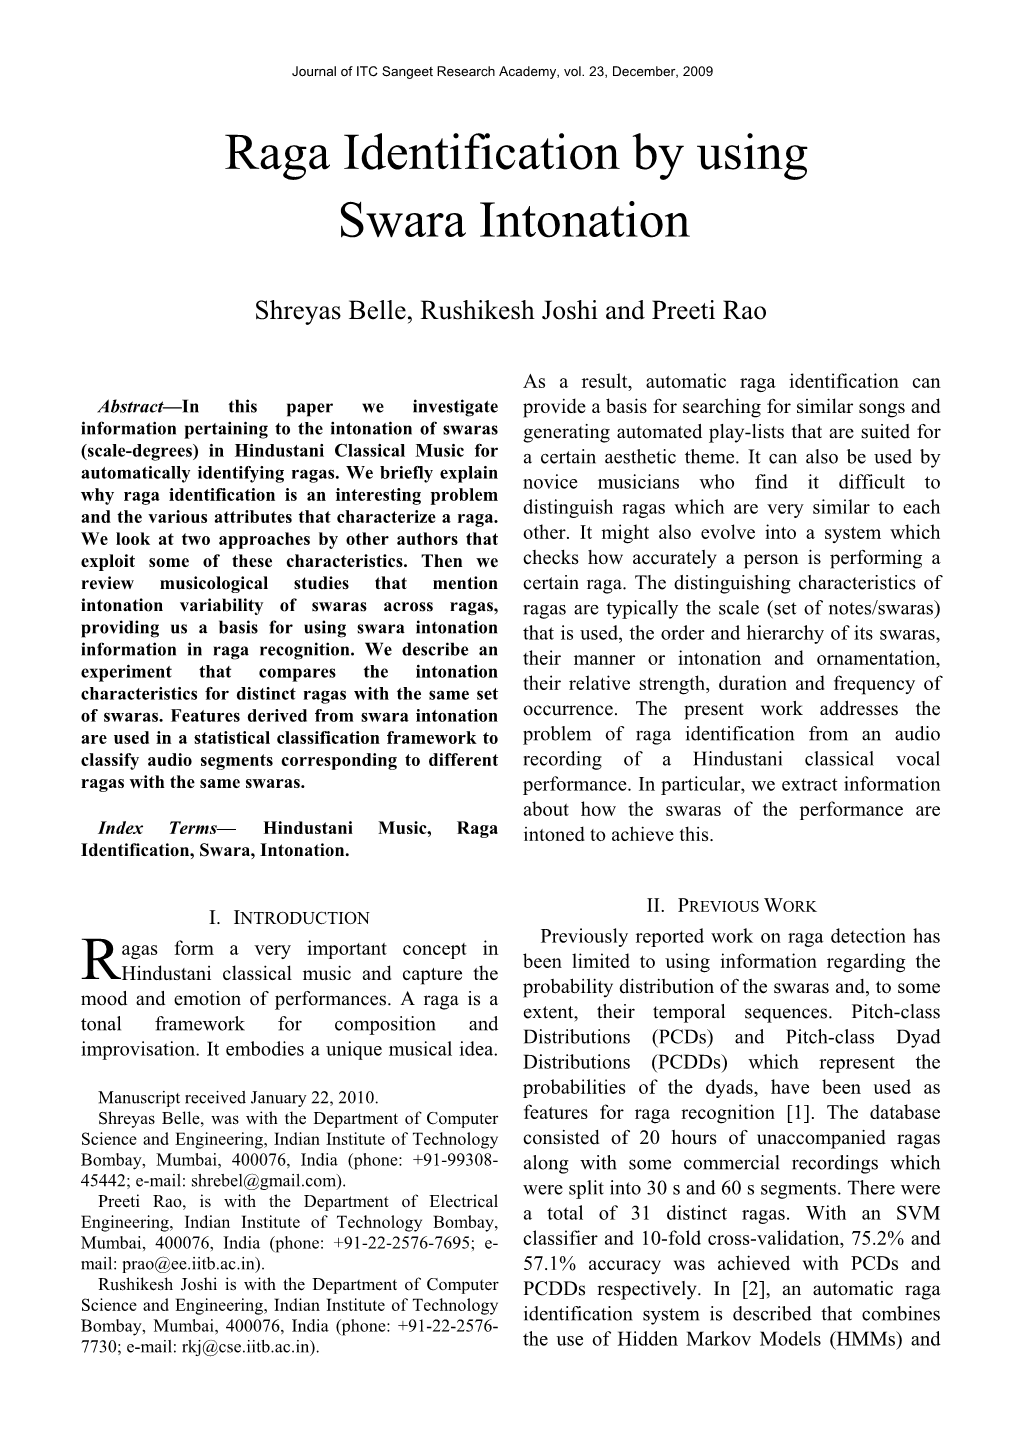 Raga Identification by Using Swara Intonation